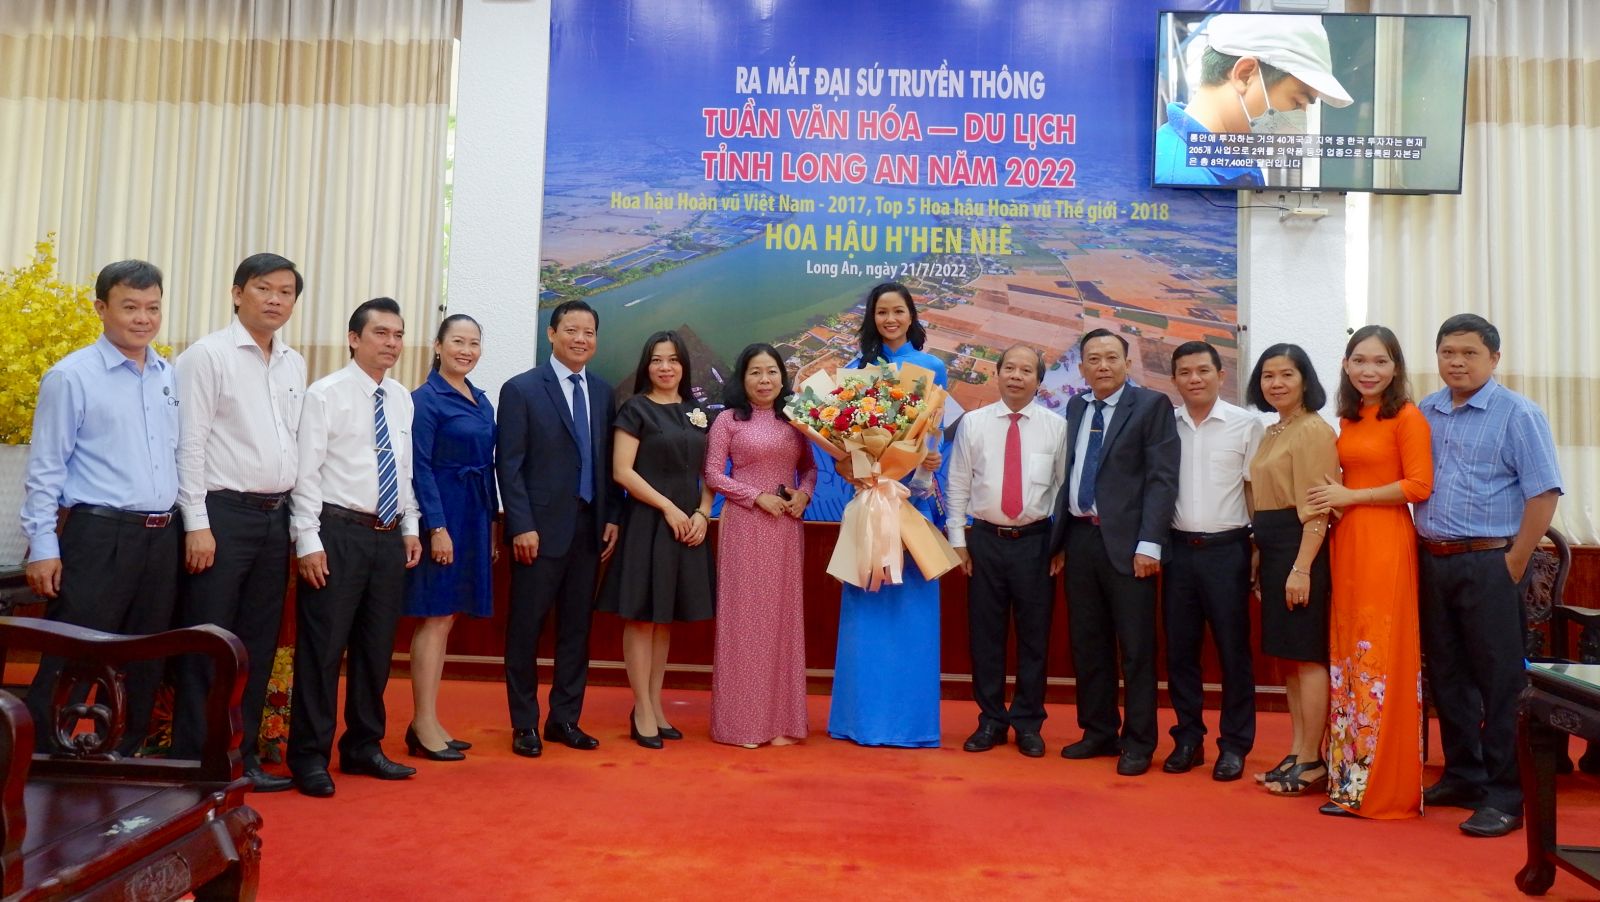 Miss H'hen Nie – media Ambassador of Long An Culture and Tourism Week 2022